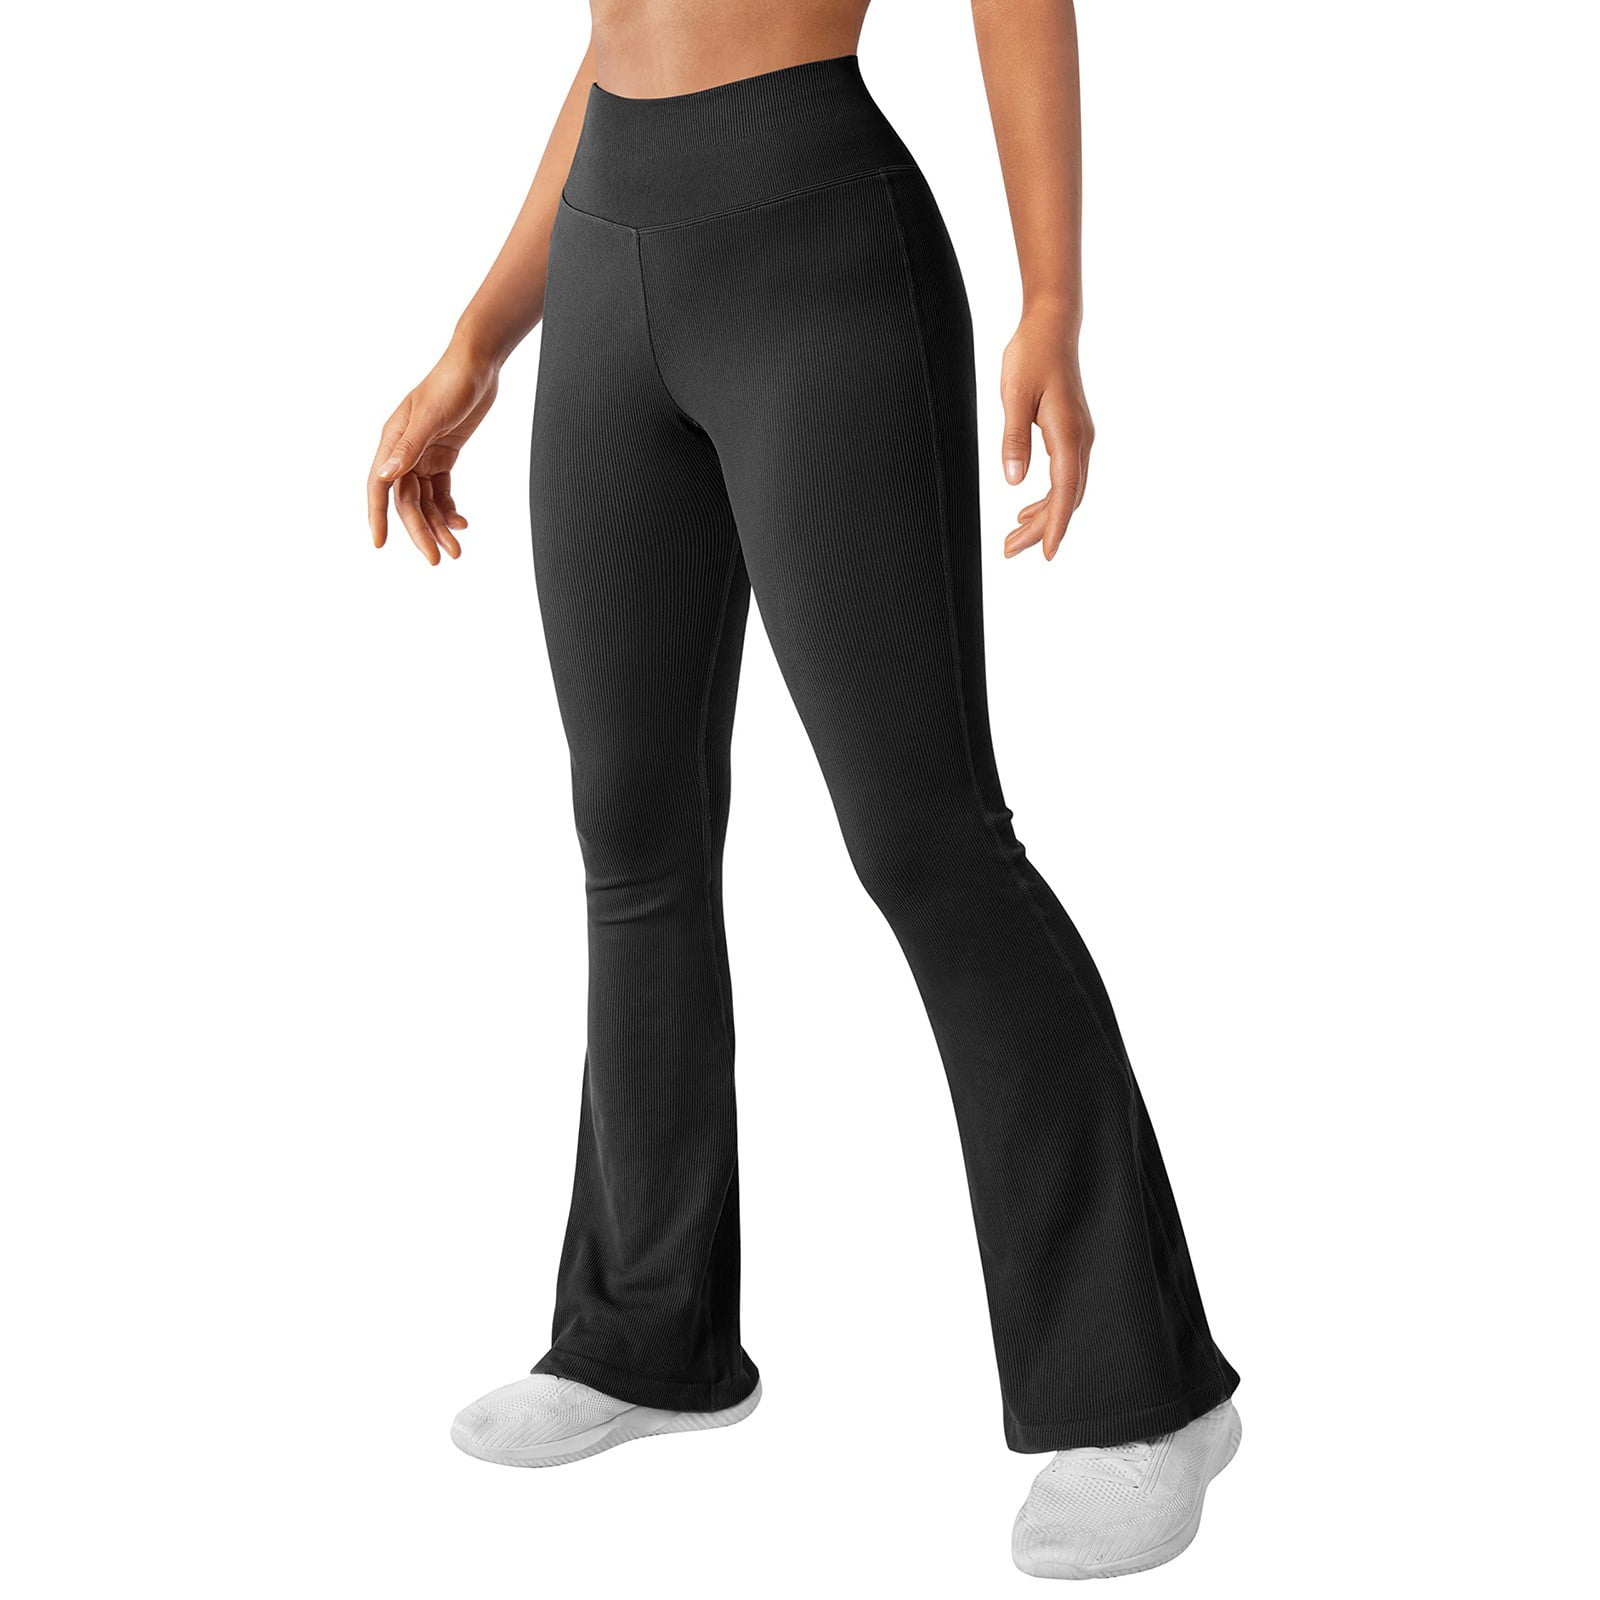 Gaiam Yoga Pants, Women's Size Medium, Black, Pull On, Side Pockets